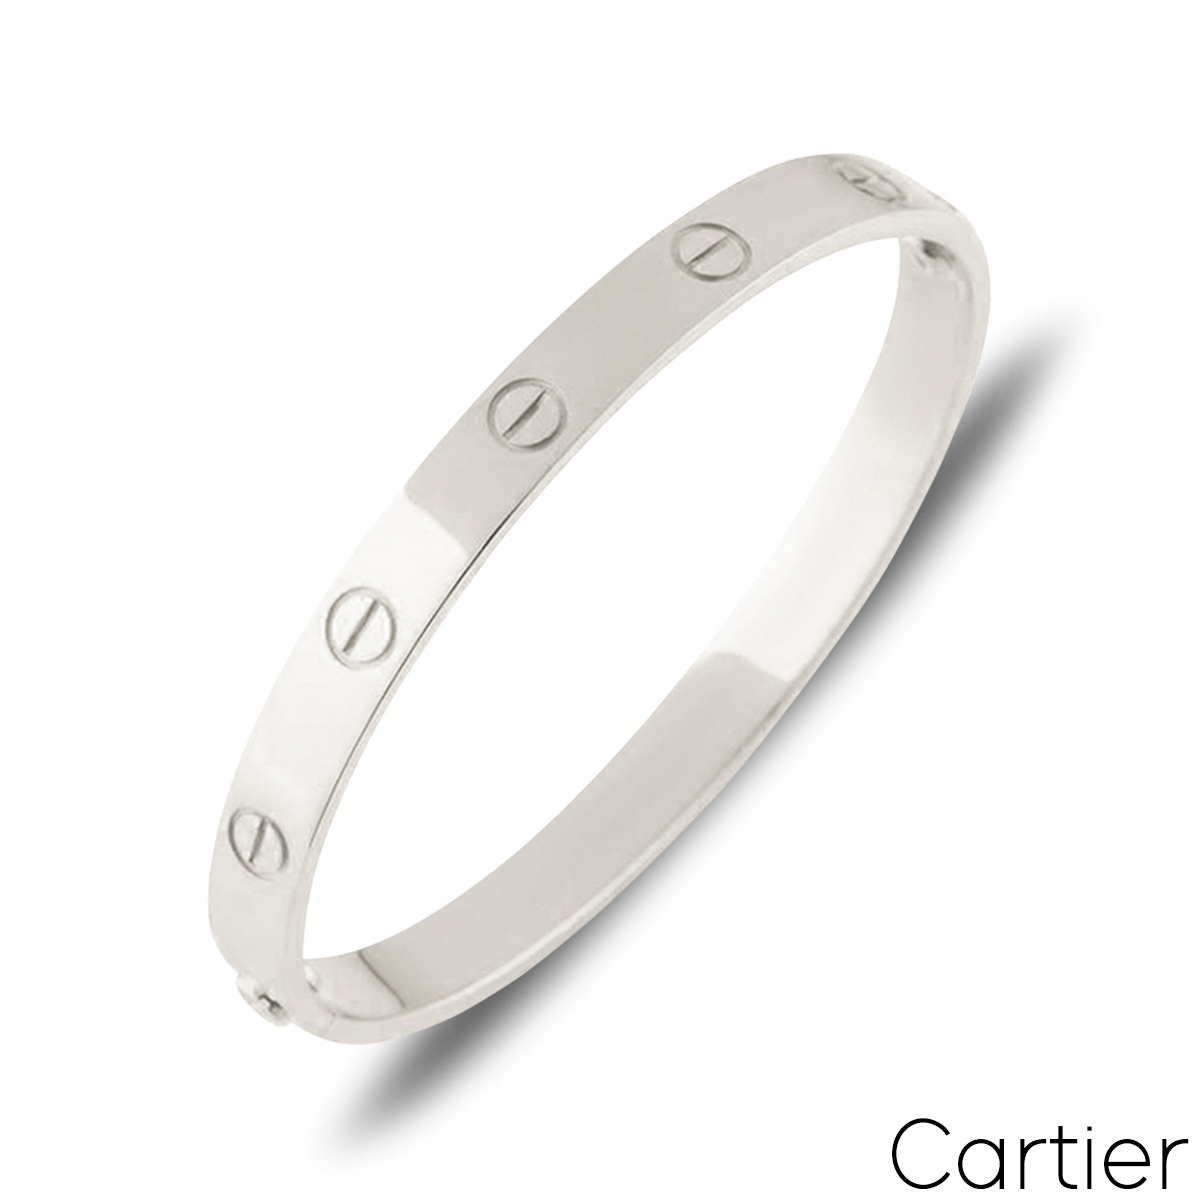 Cartier White Gold Plain Love Bracelet Size 20 B6035420